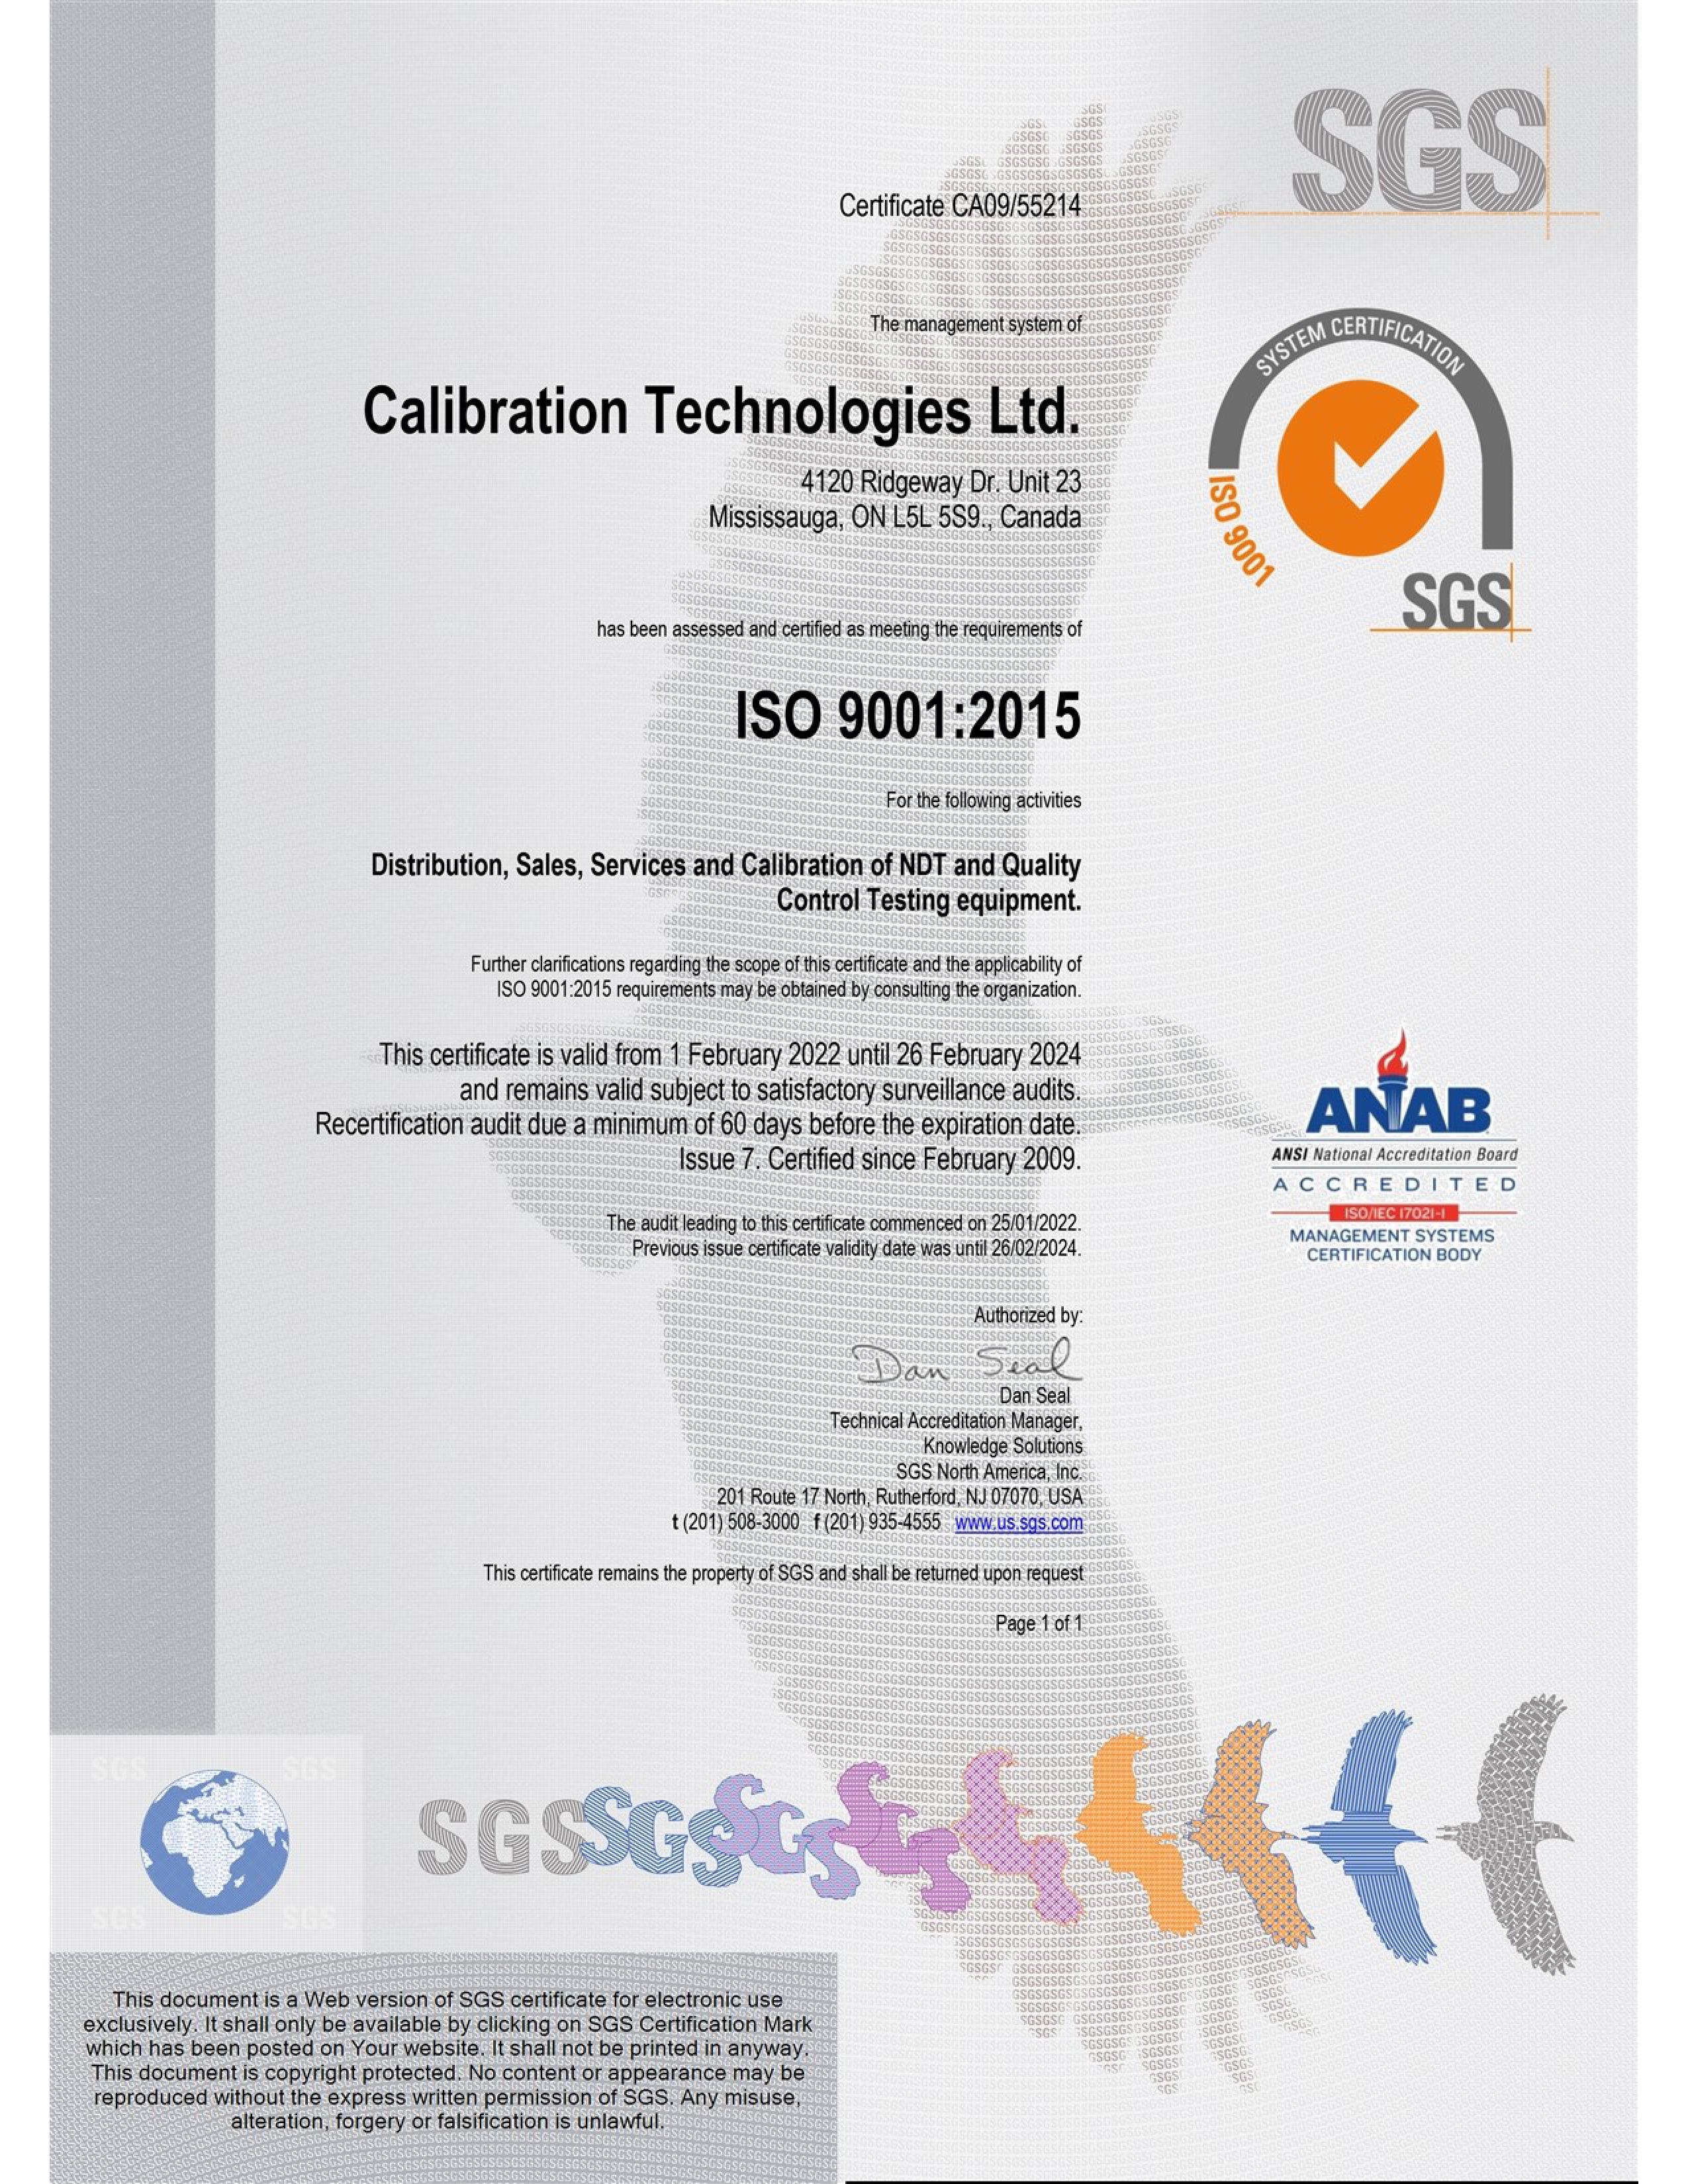 Calibration Technologies Ltd. ISO Certification